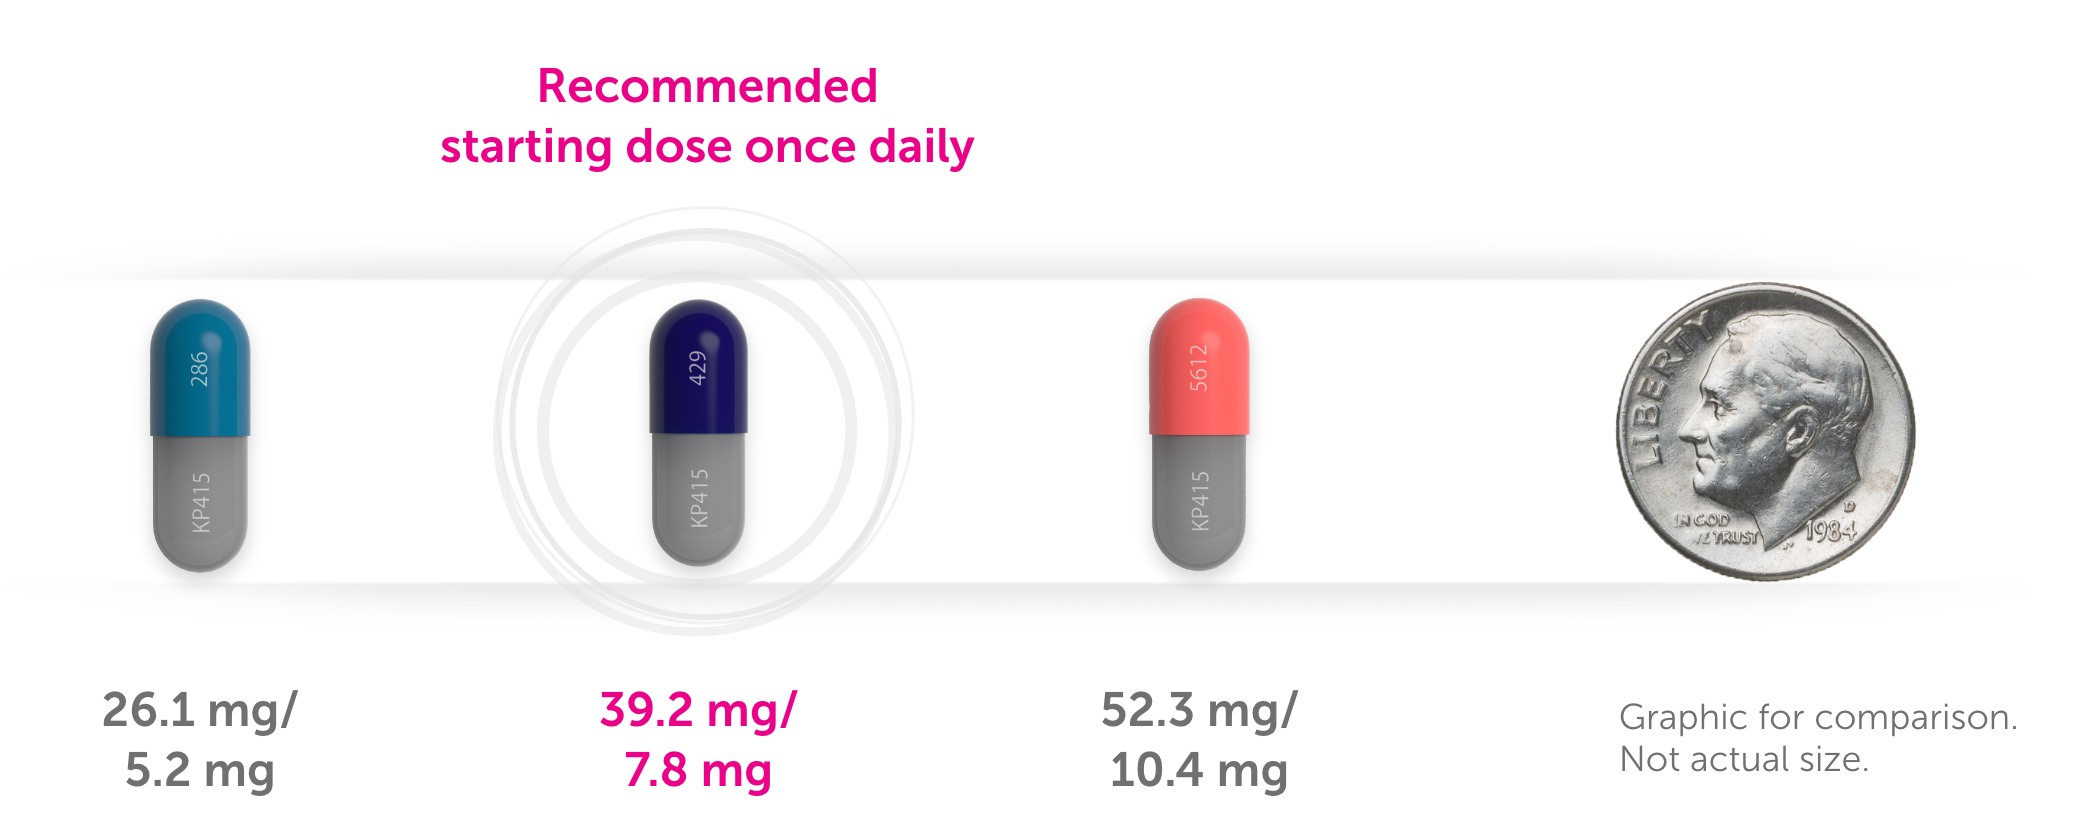 AZSTARYS™ 26.1/5.2 mg, 39.2/7.8 mg, 52.3/10.4 mg capsules are smaller than a dime AZ